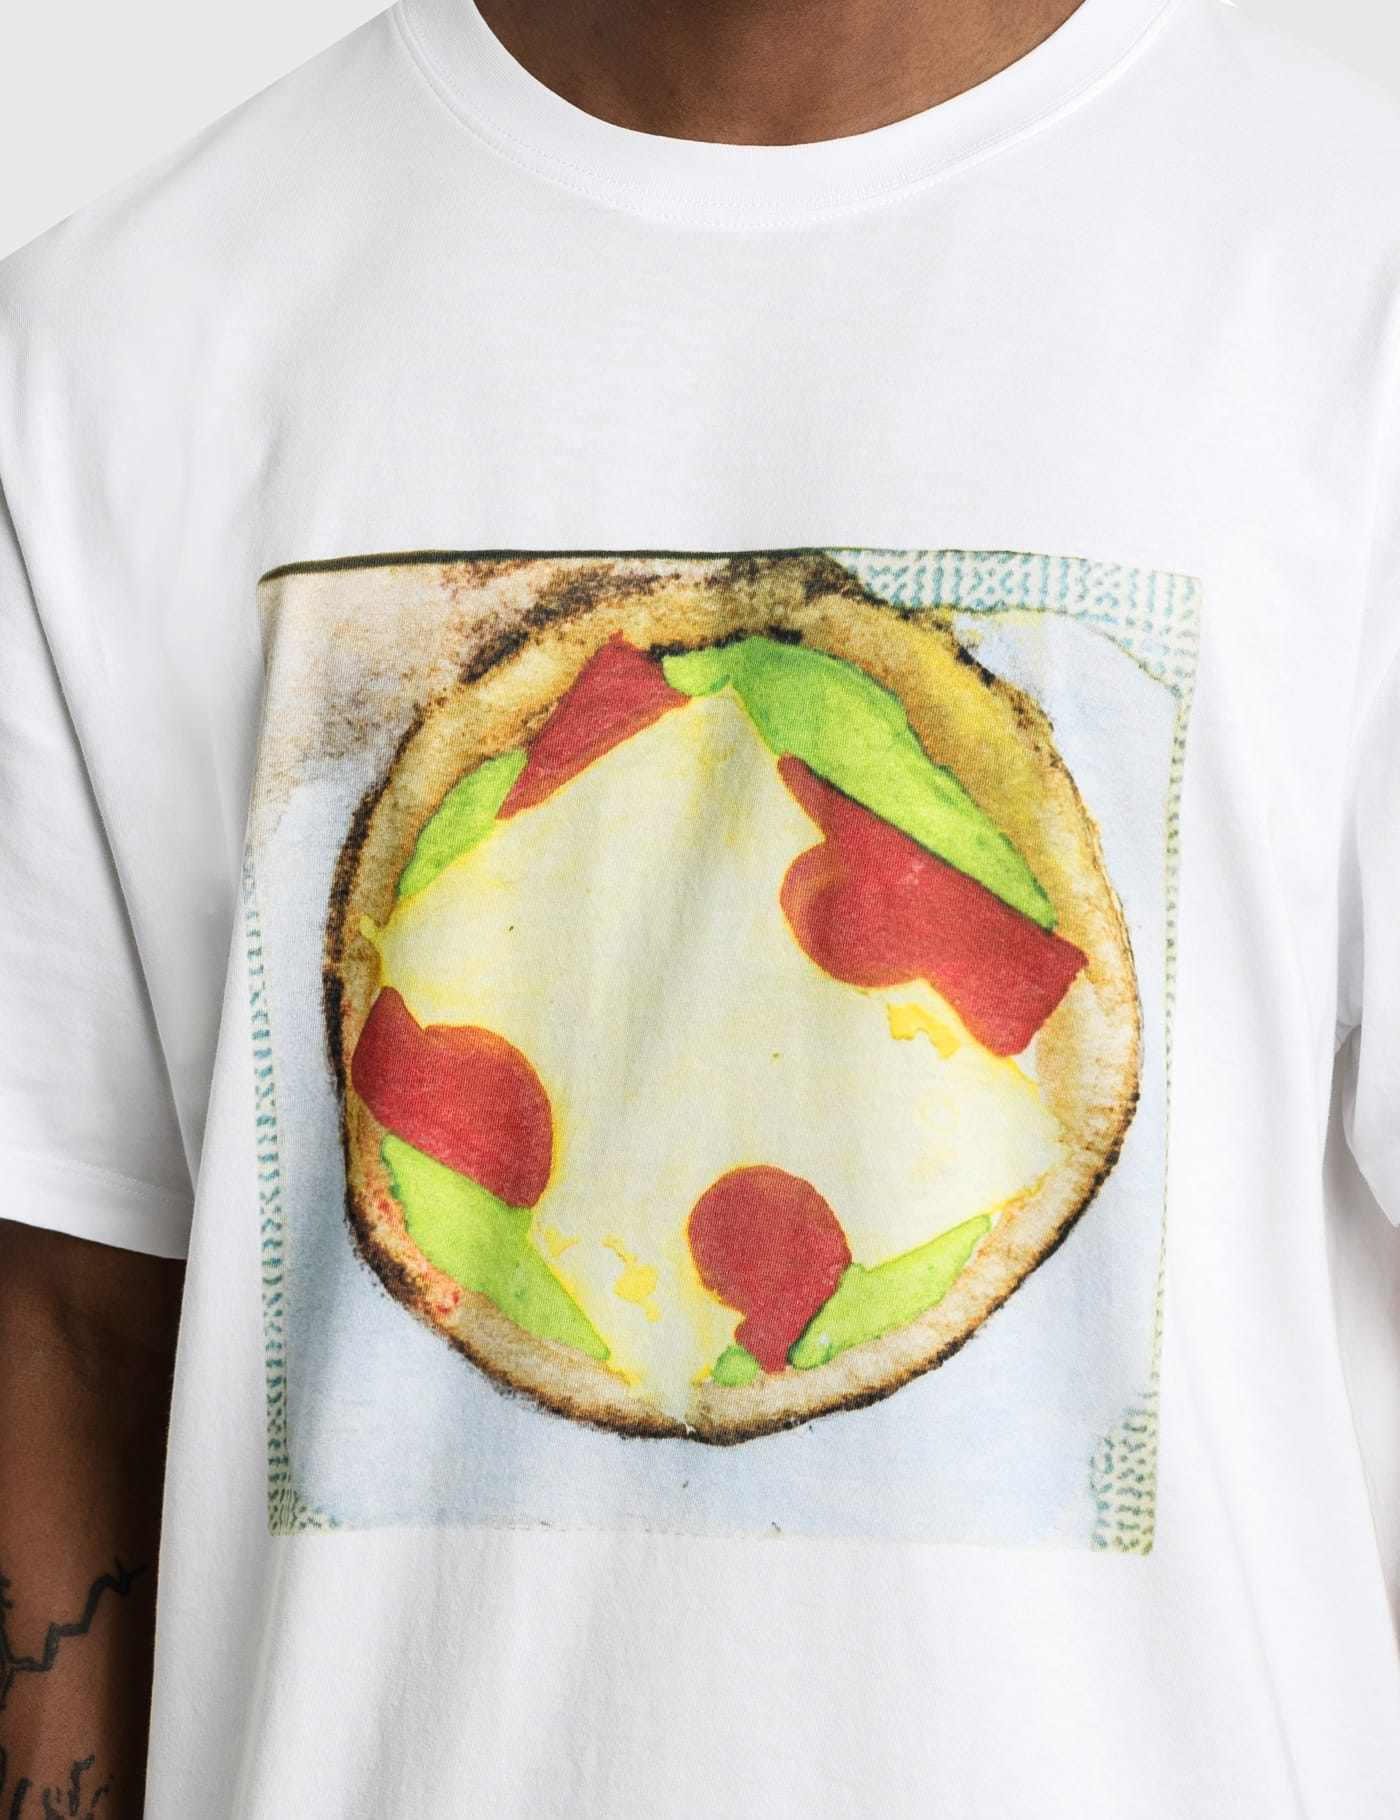 Loewe - Pizza Print T-shirt | HBX - HYPEBEAST 為您搜羅全球潮流時尚品牌